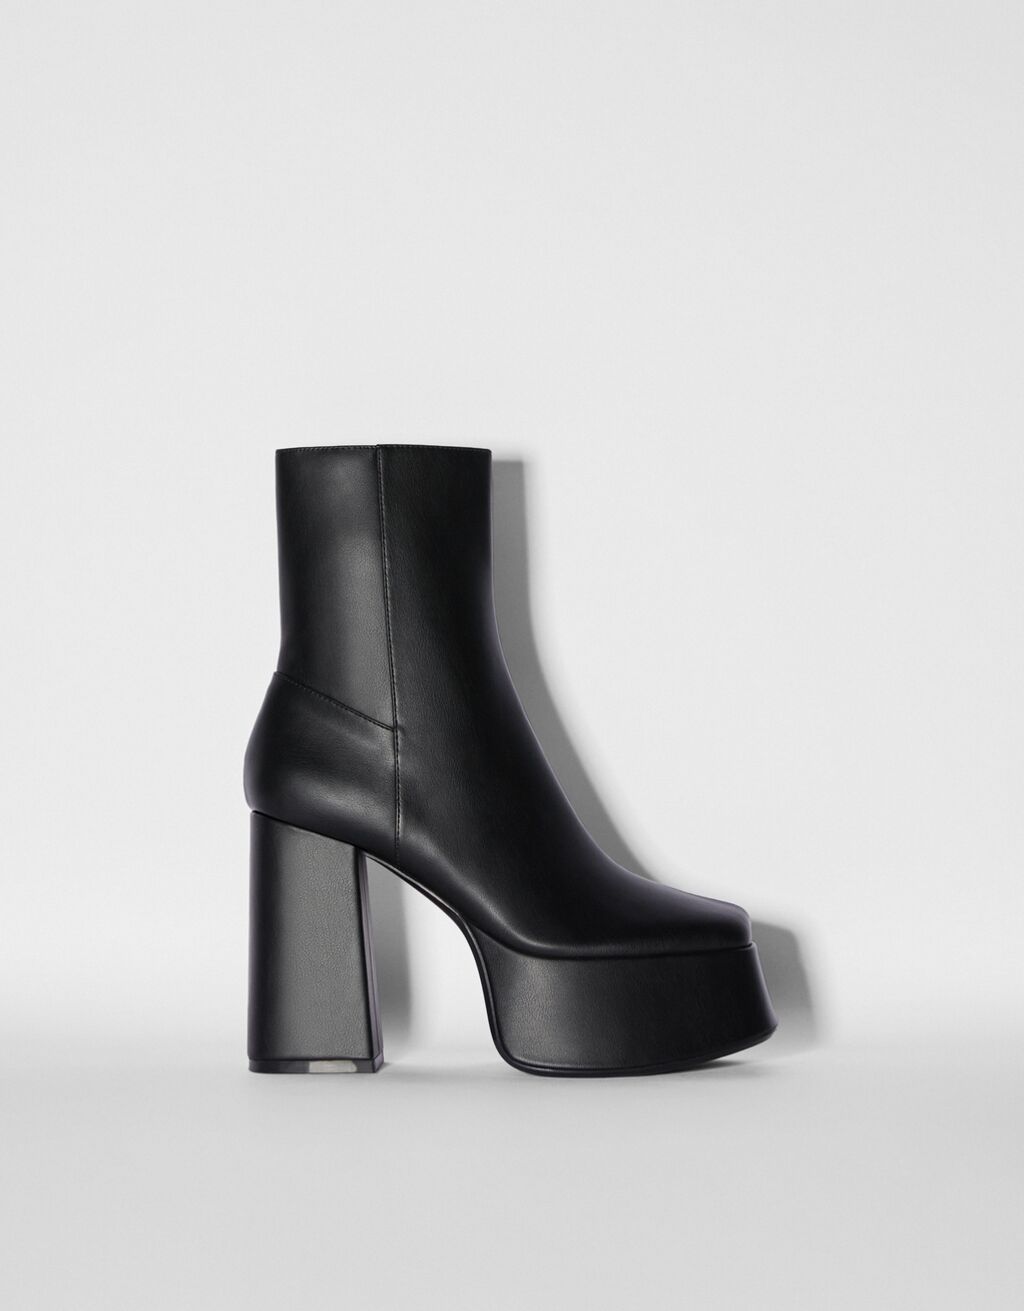 discount 52% Bershka boots Black 37                  EU WOMEN FASHION Footwear Boots Basic 